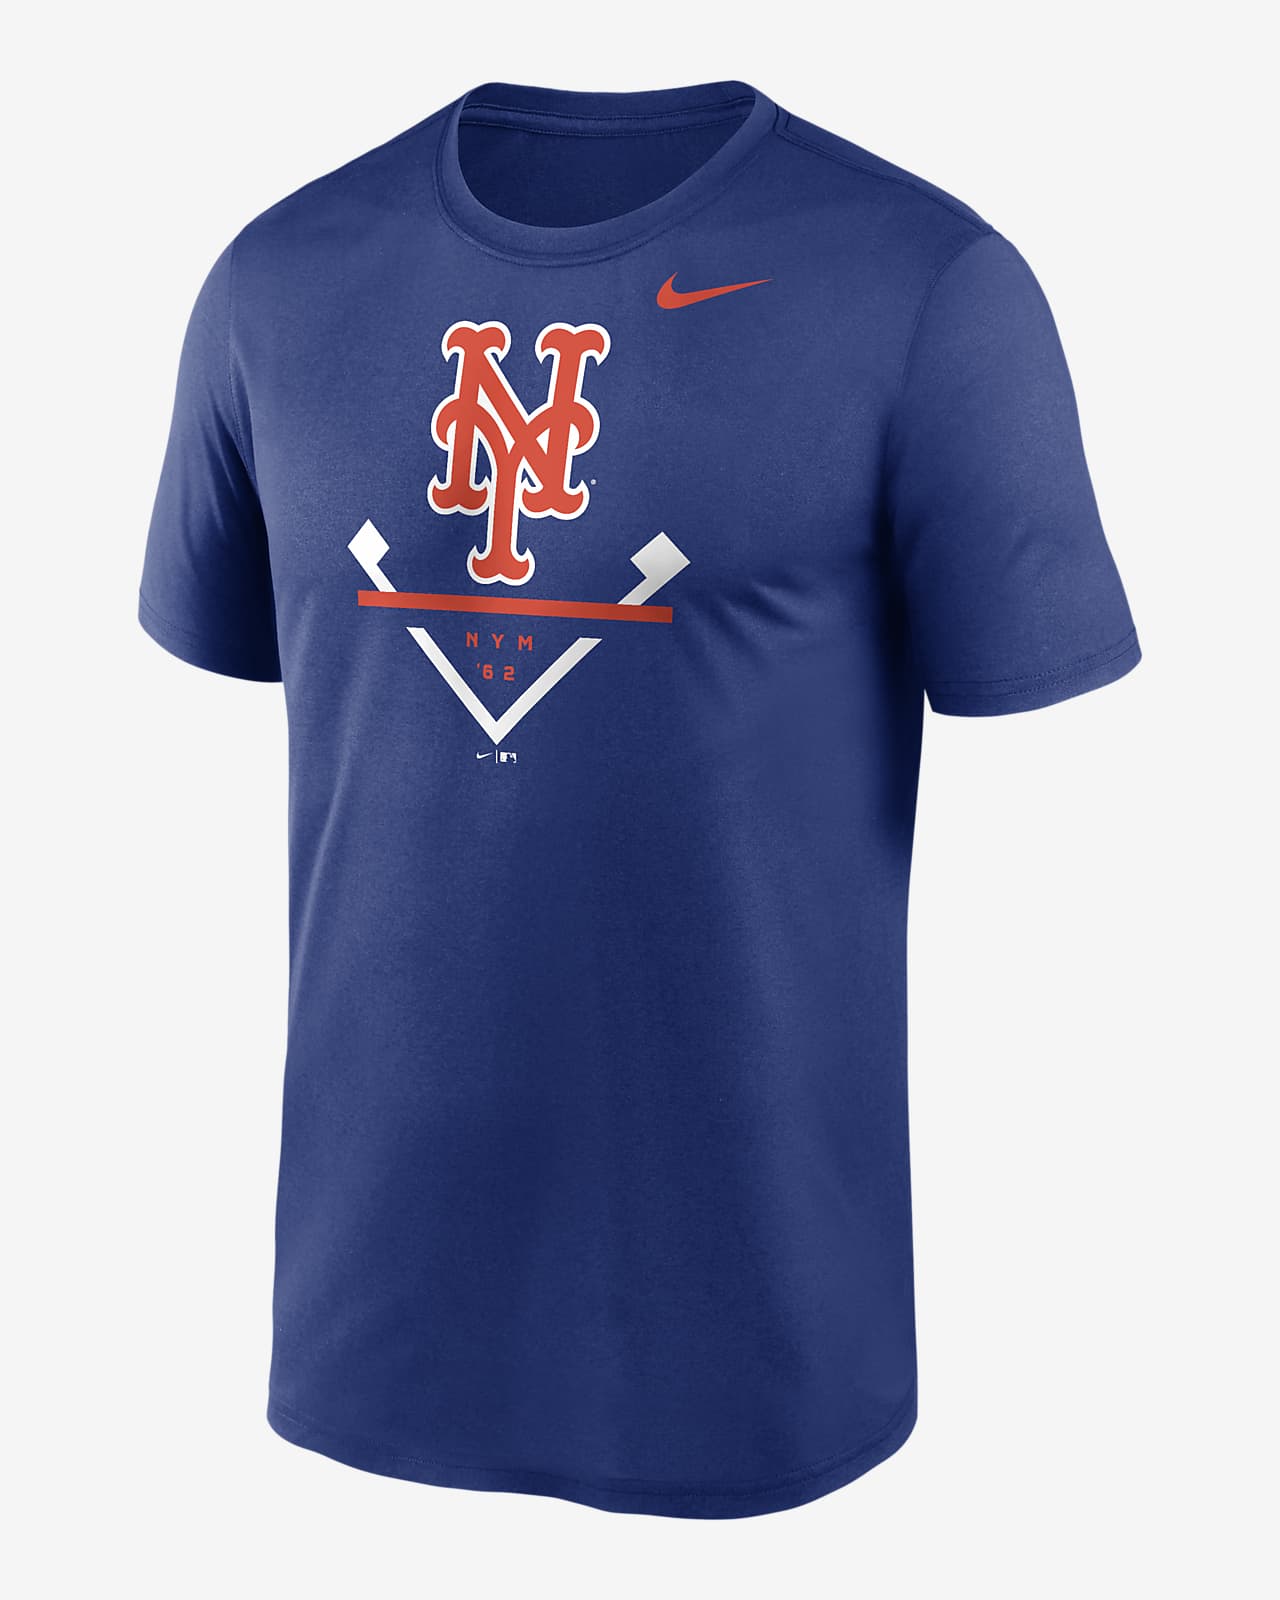 Nike Dri-FIT Icon Legend (MLB New York Mets) Men's T-Shirt